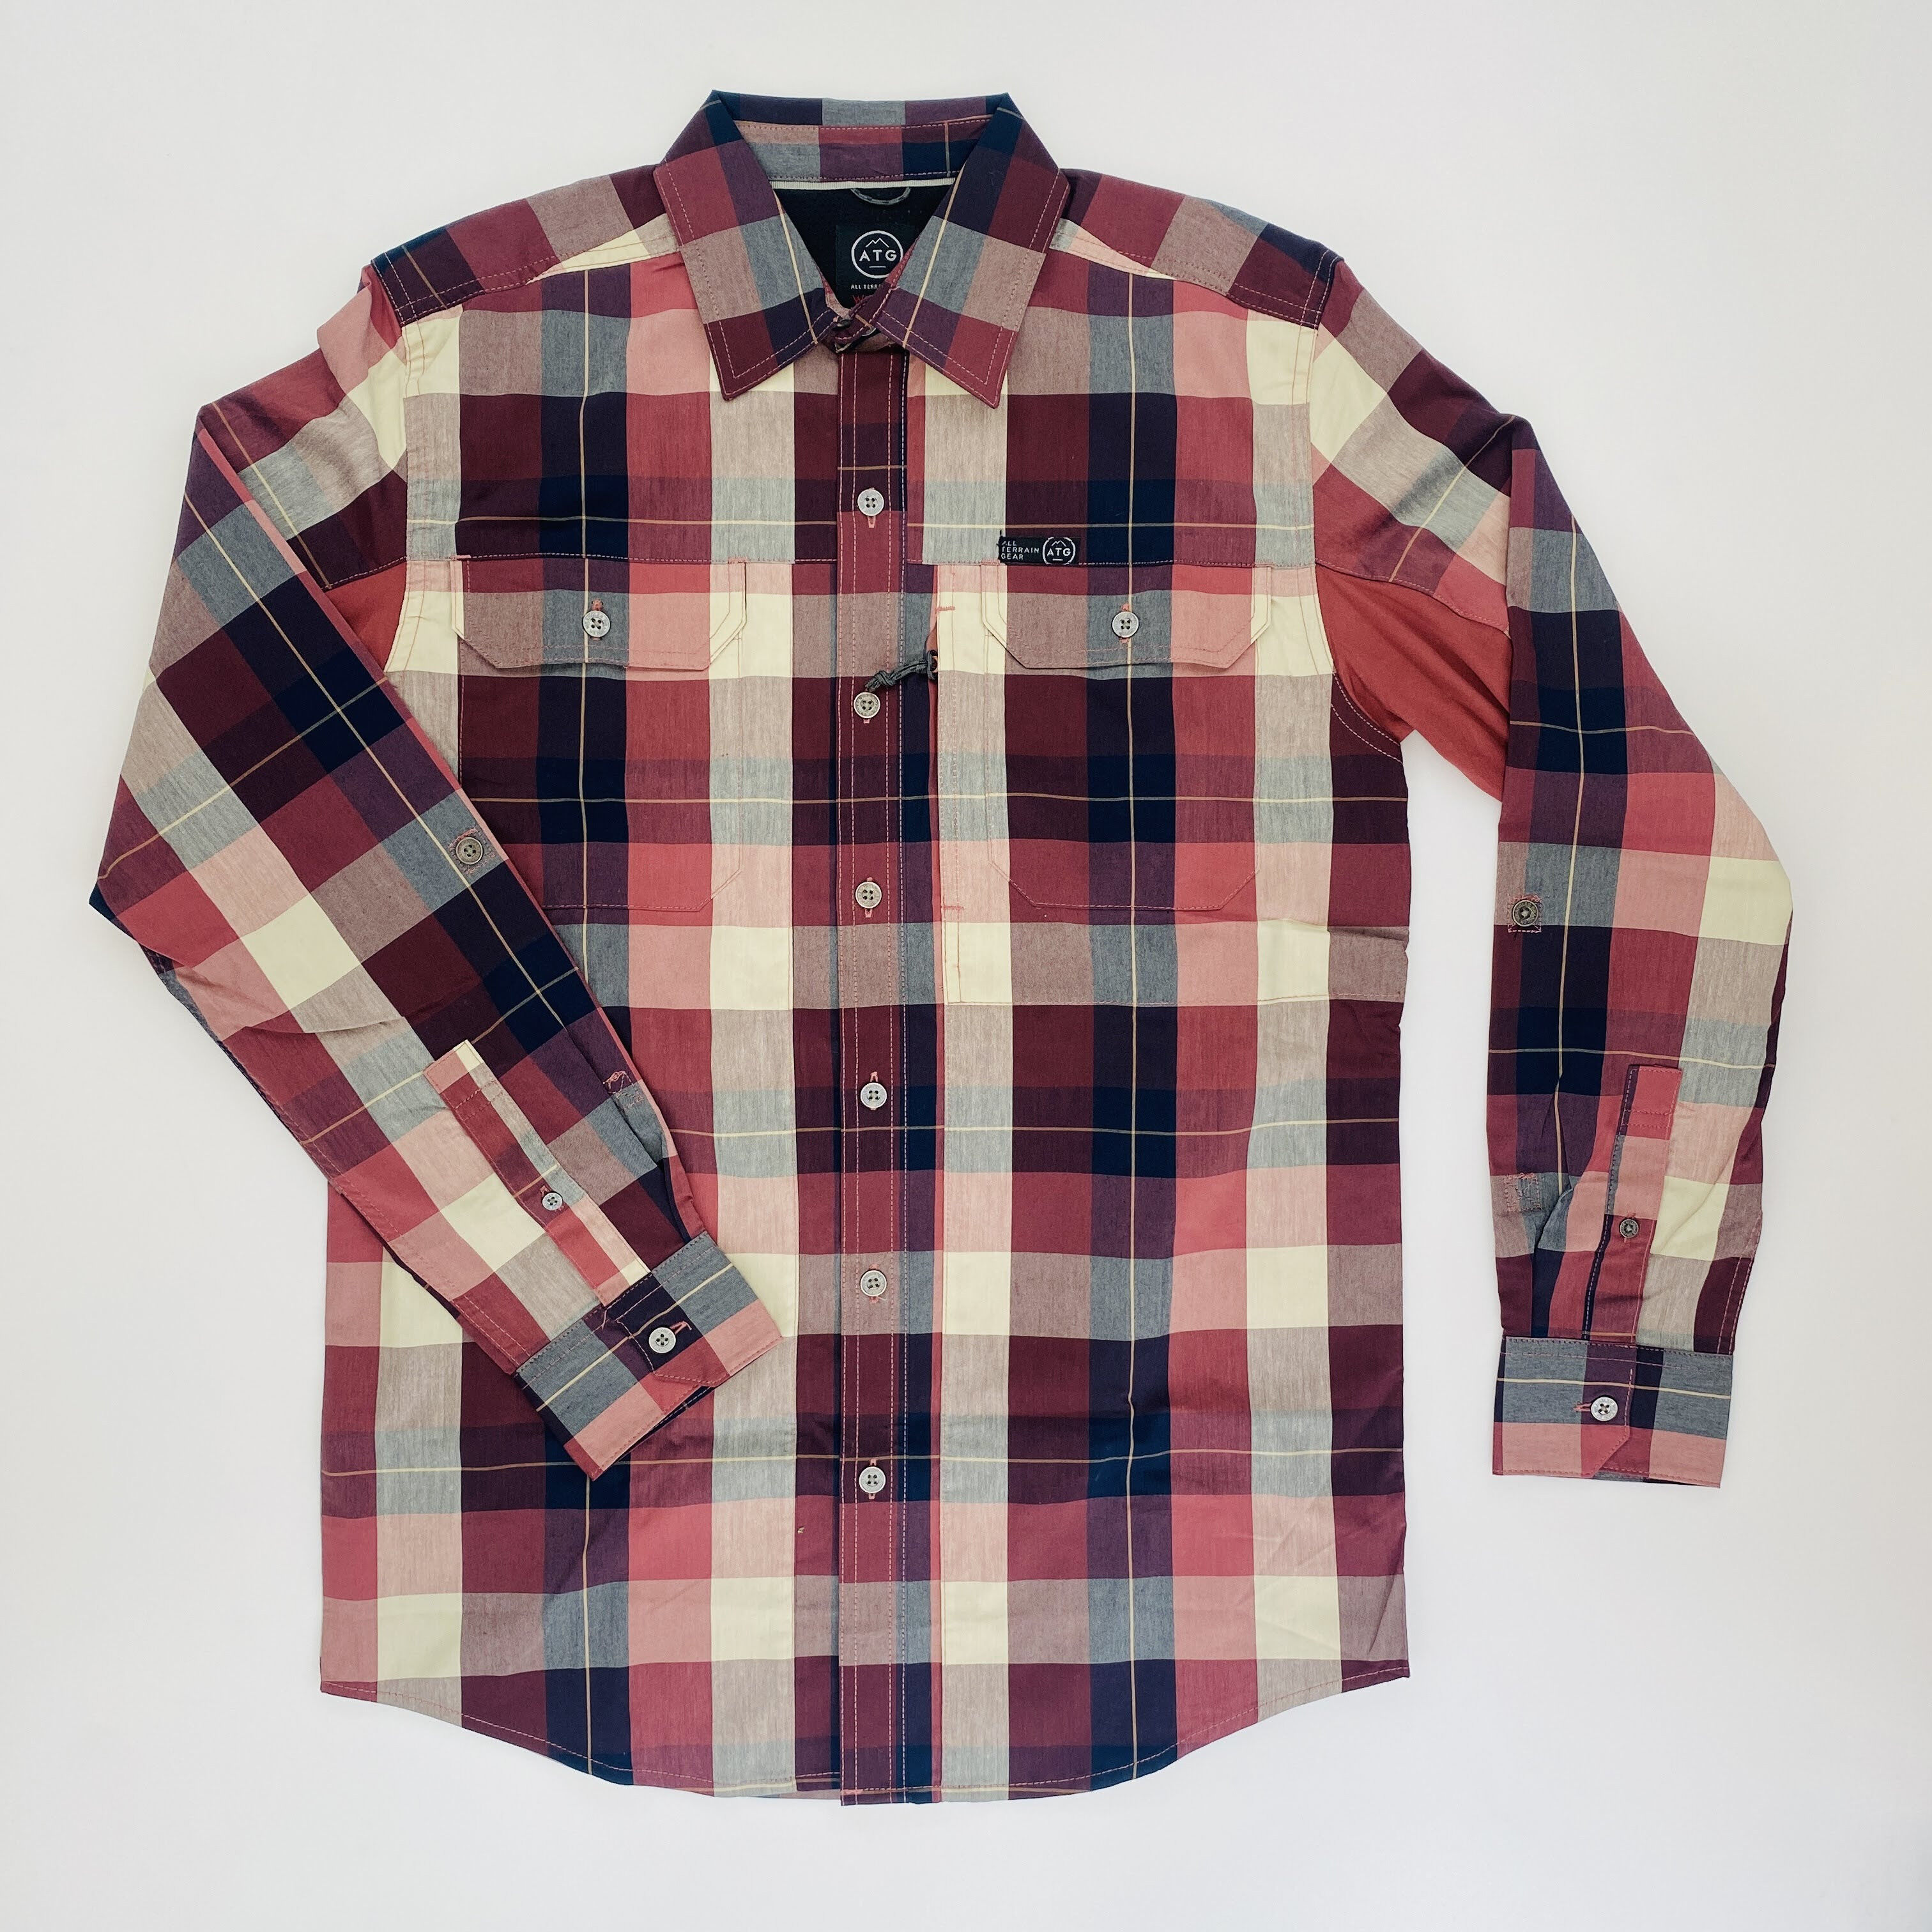 Wrangler Mixed Material Shirt - Camicia di seconda mano - Uomo - Multicolore - S | Hardloop